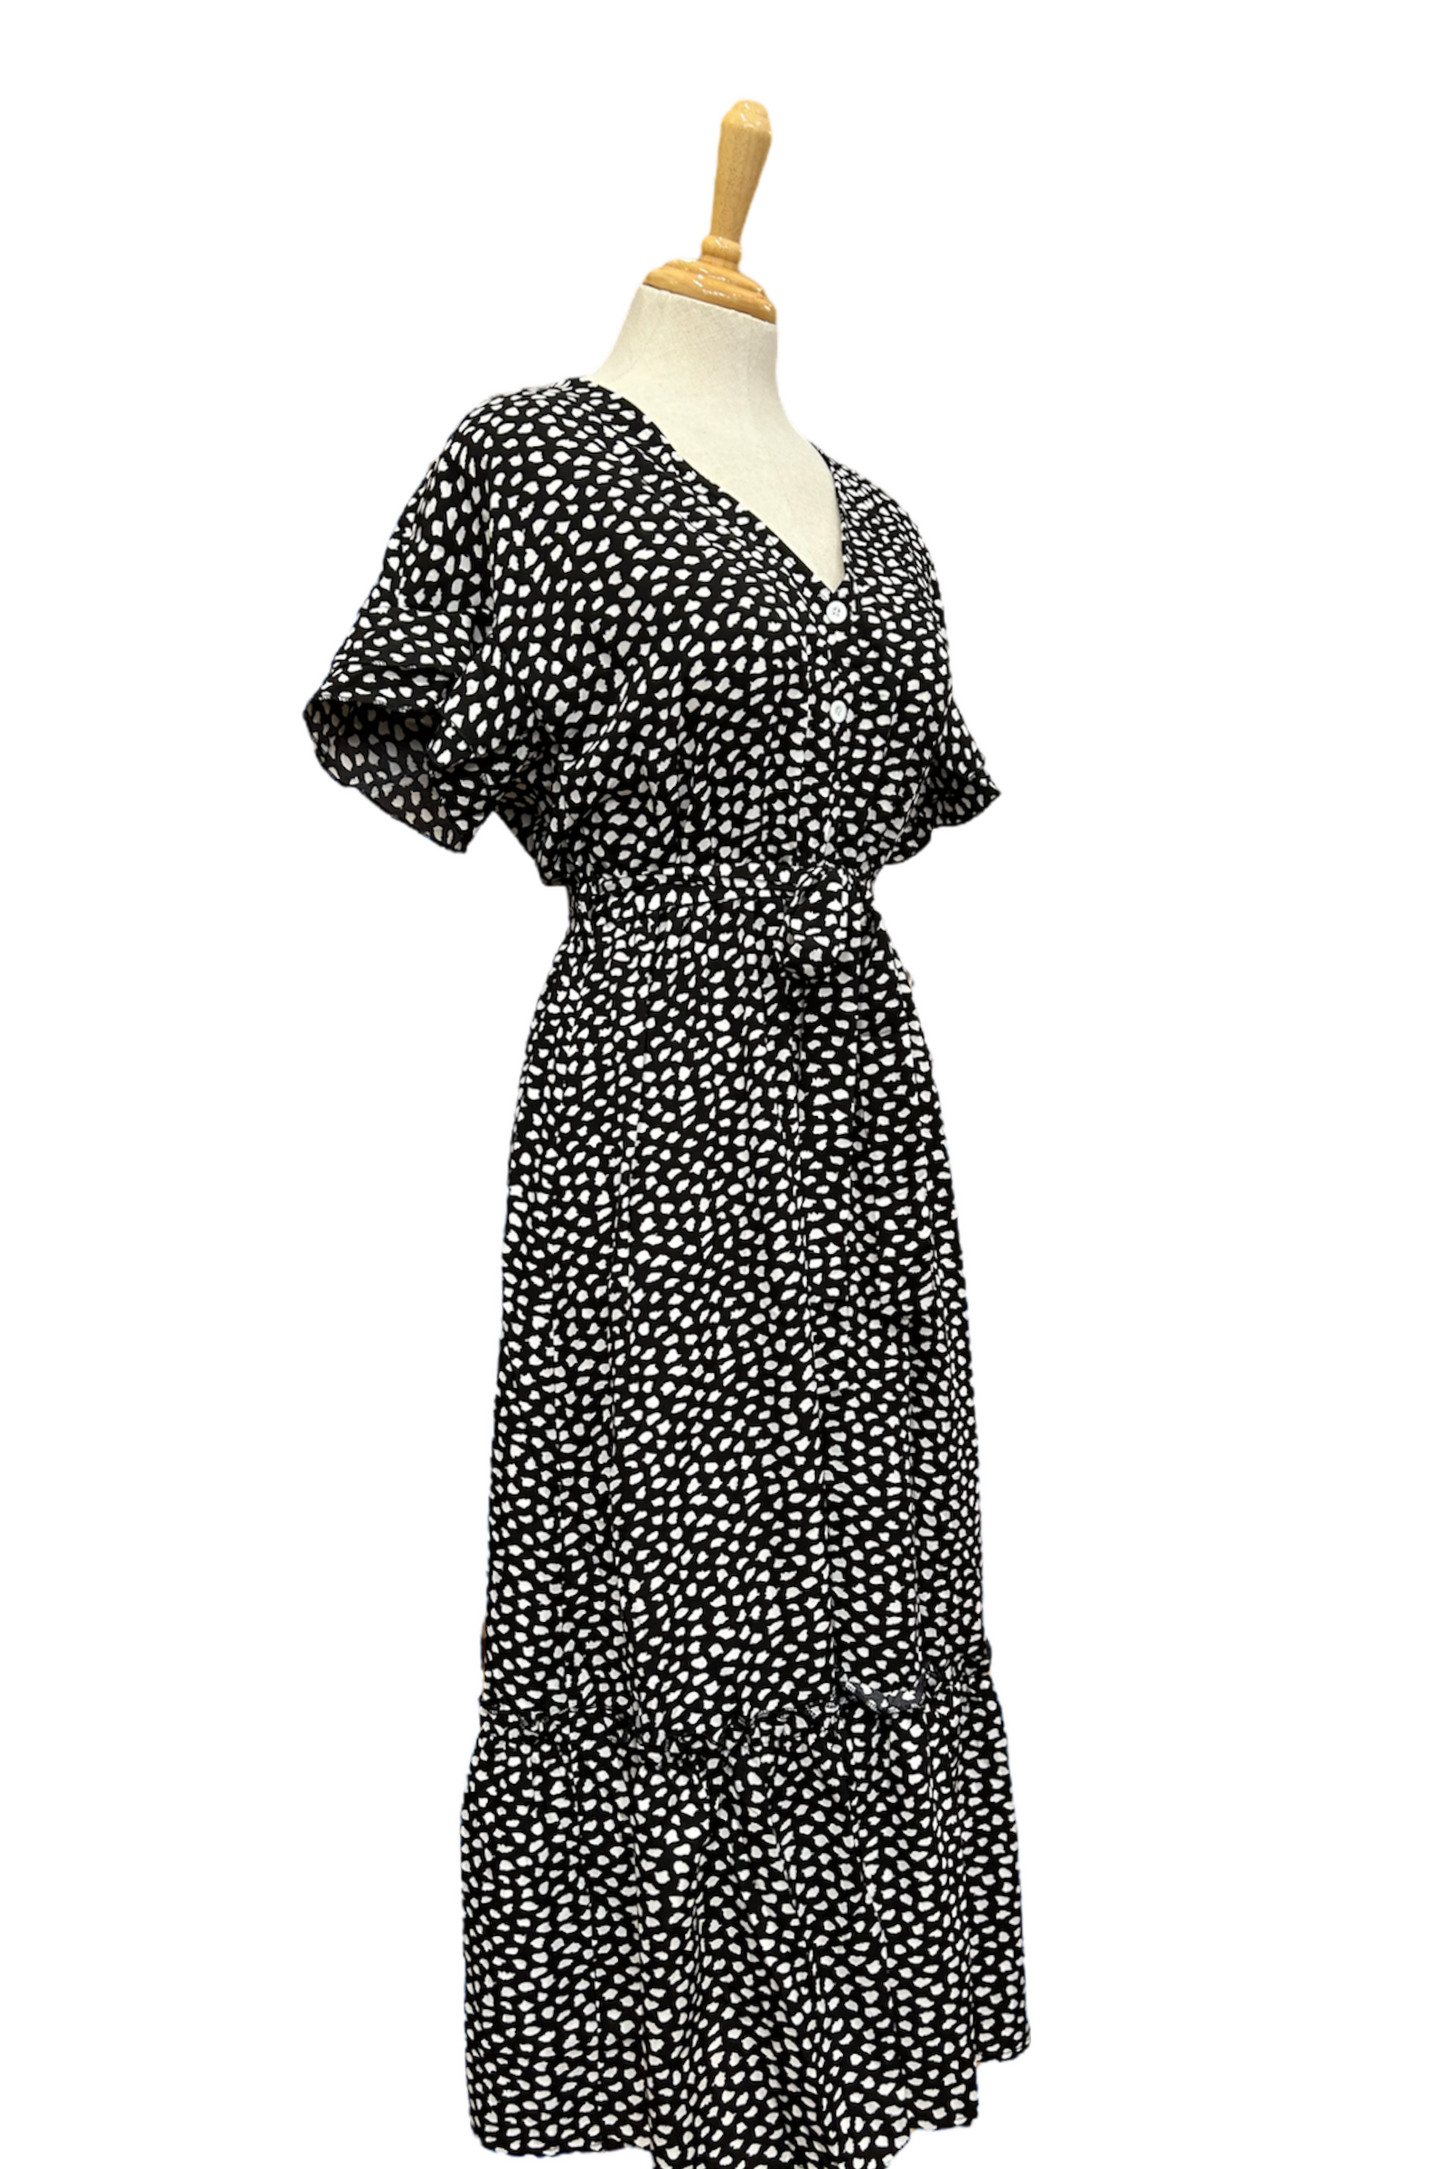 Leopard Spot Dress (Beige only size L & XL)